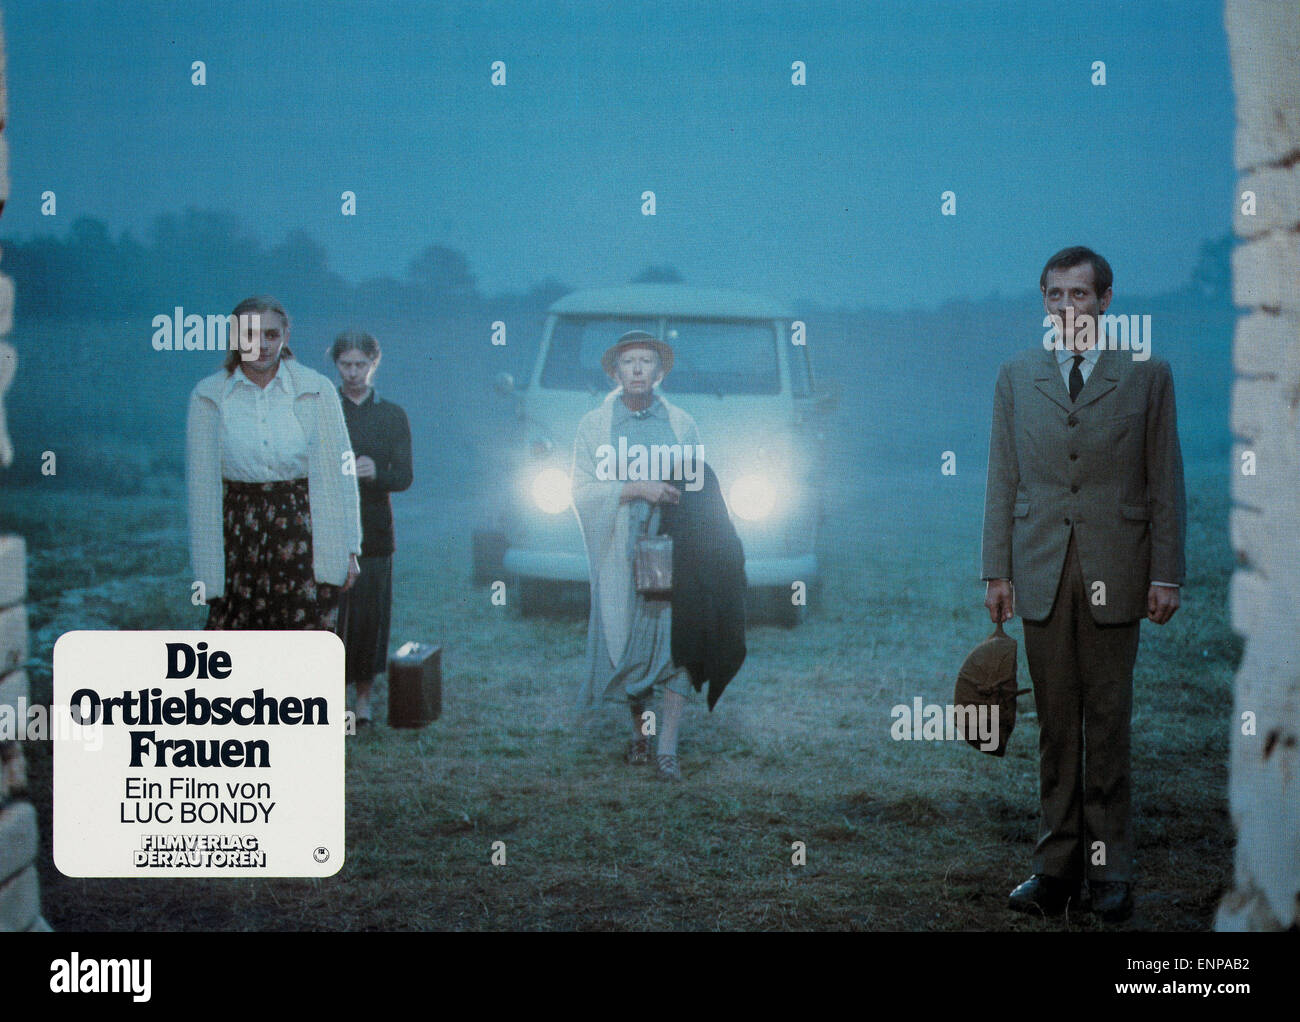 Die Ortliebschen Frauen, Deutschland 1981, Regie: Luc Bondy, Monia: Edith Heerdegen, Libgard Scharz, Klaus Pohl, Elisabeth Stockfoto